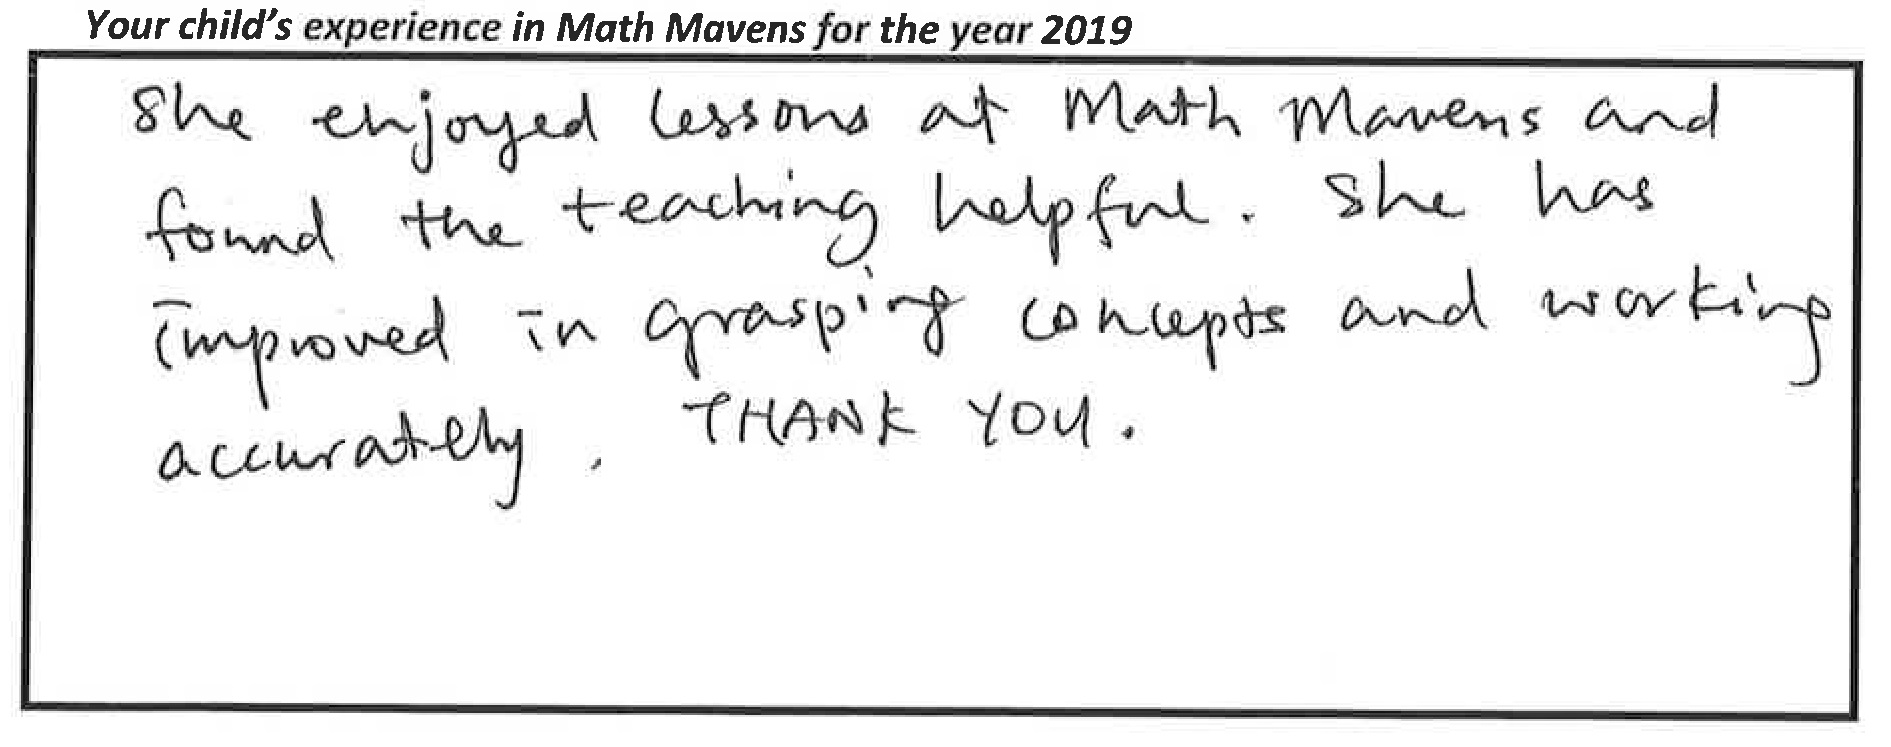 "... enjoyed lessons at Math Mavens…"